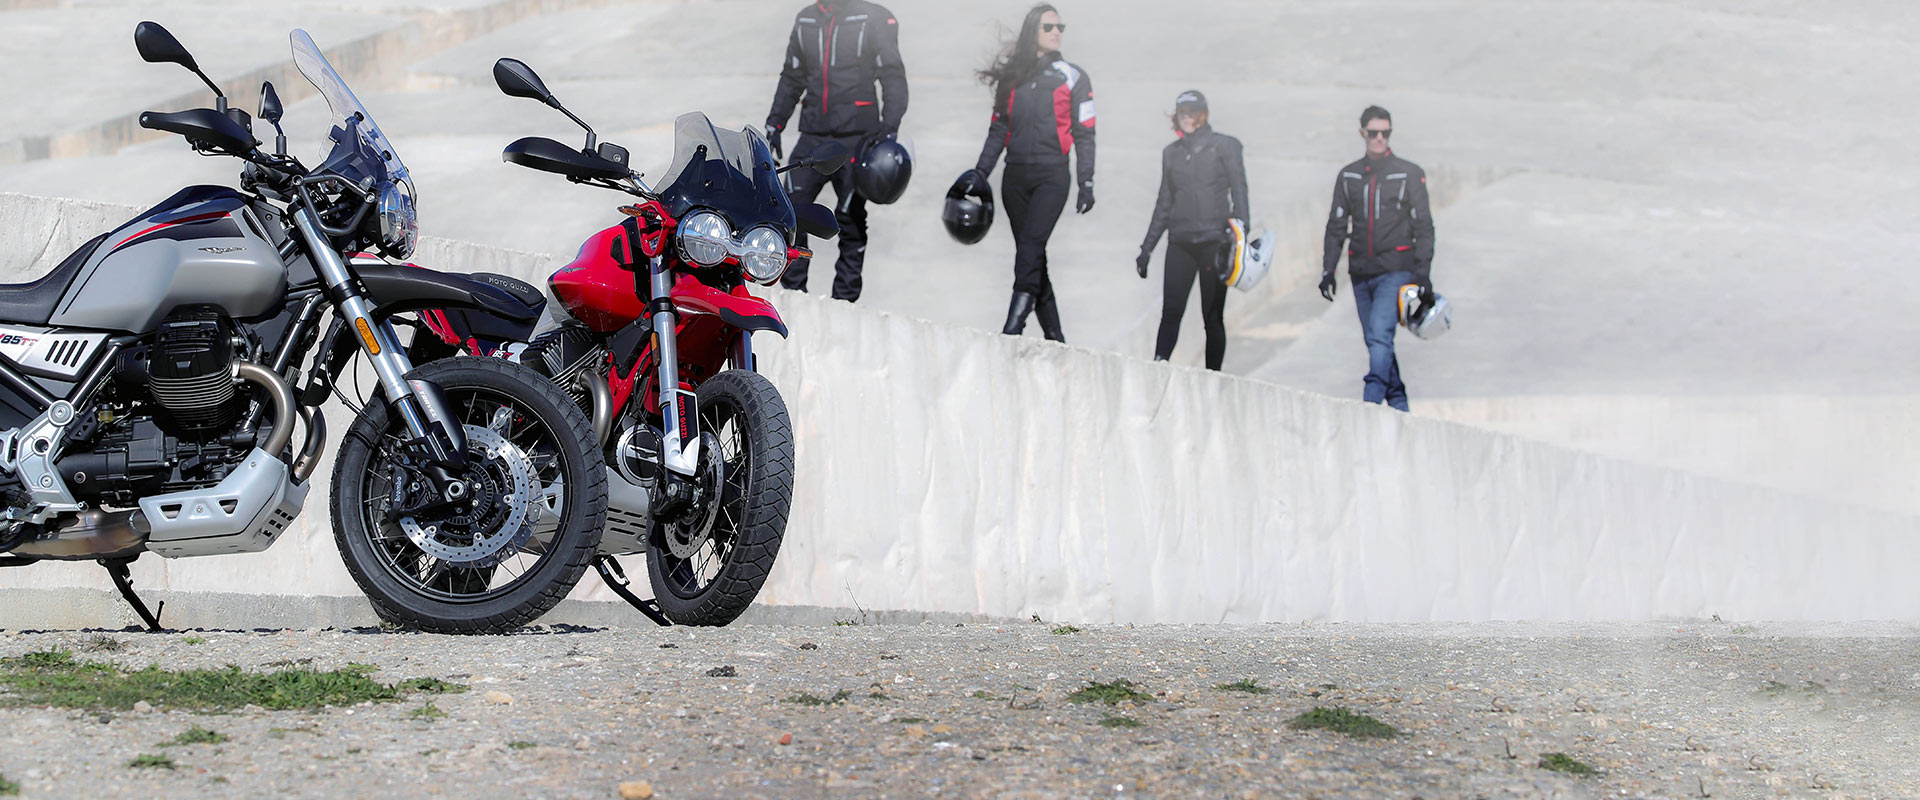 Moto Guzzi: Italian Motorcycles. Official Website